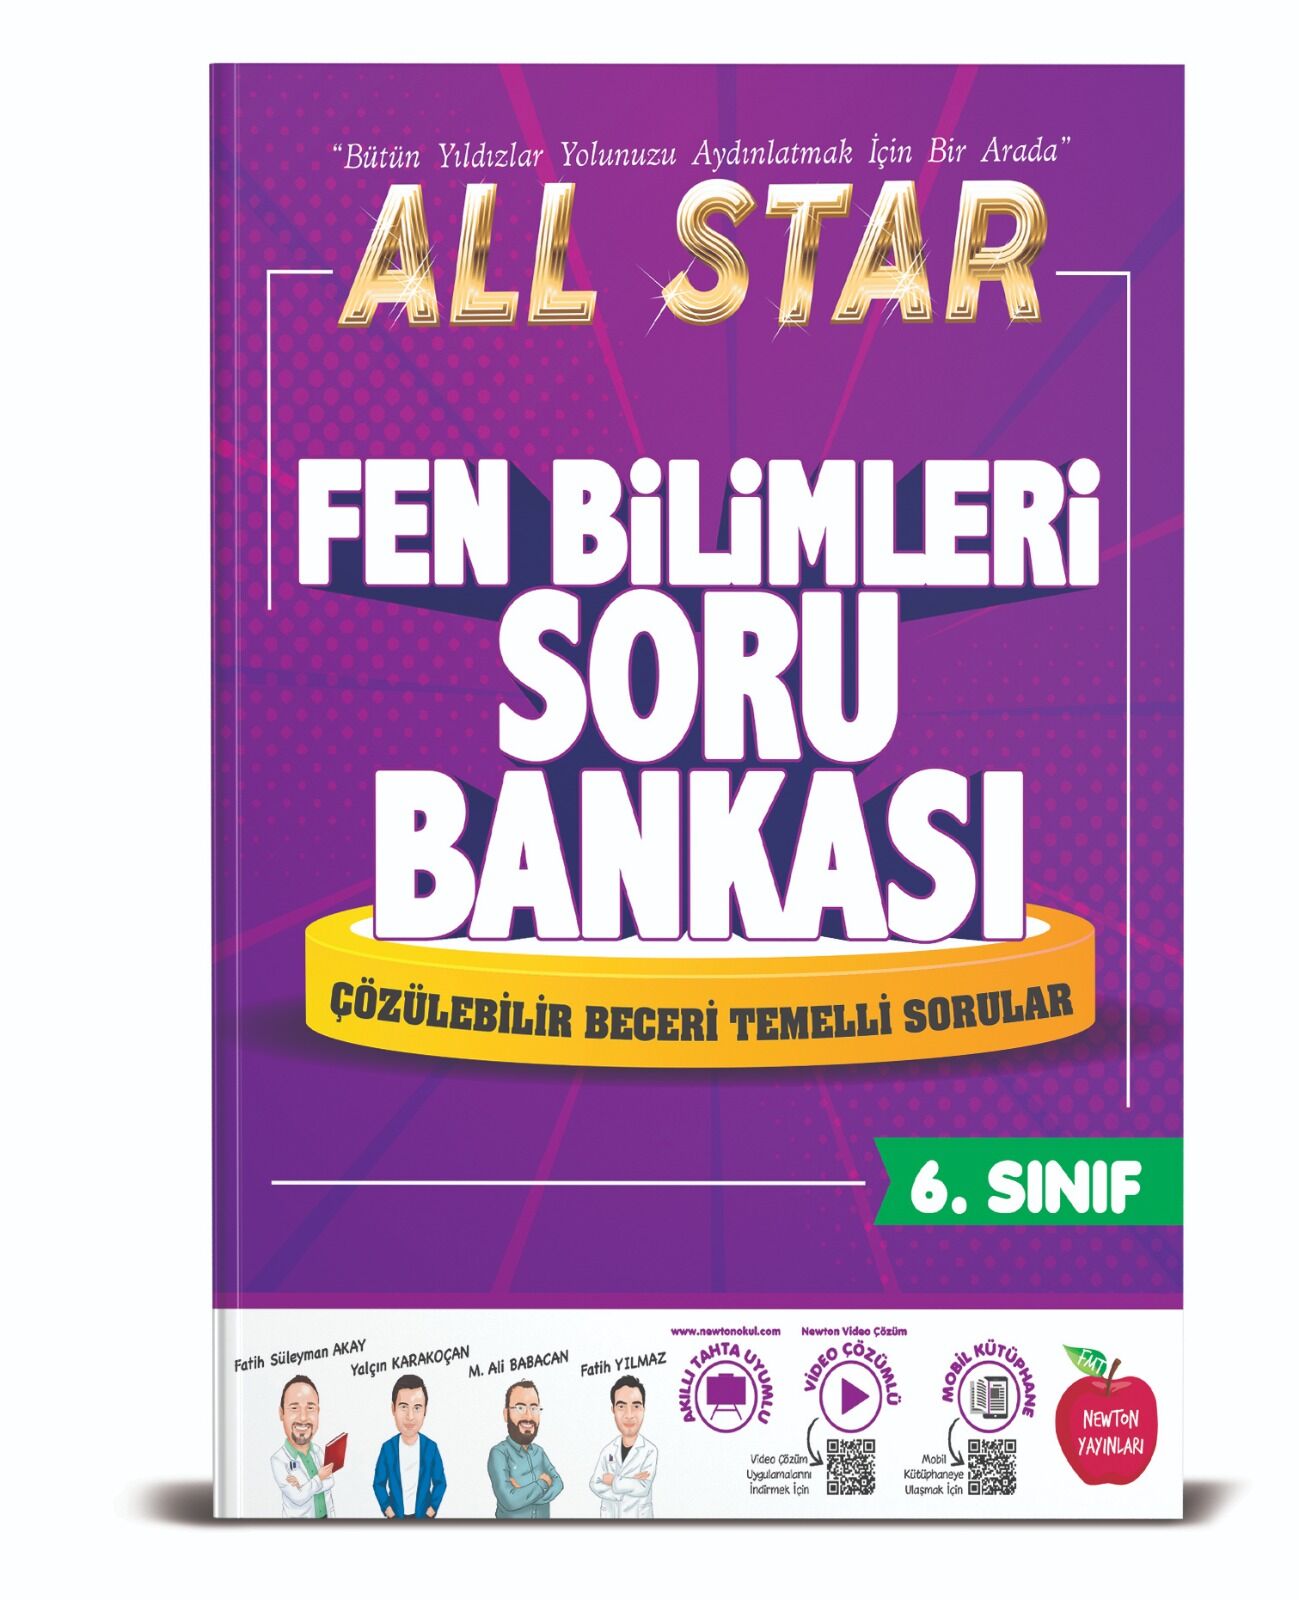 '6.SINIF ALL STAR FEN BİLİMLERİ SORU BANKASI